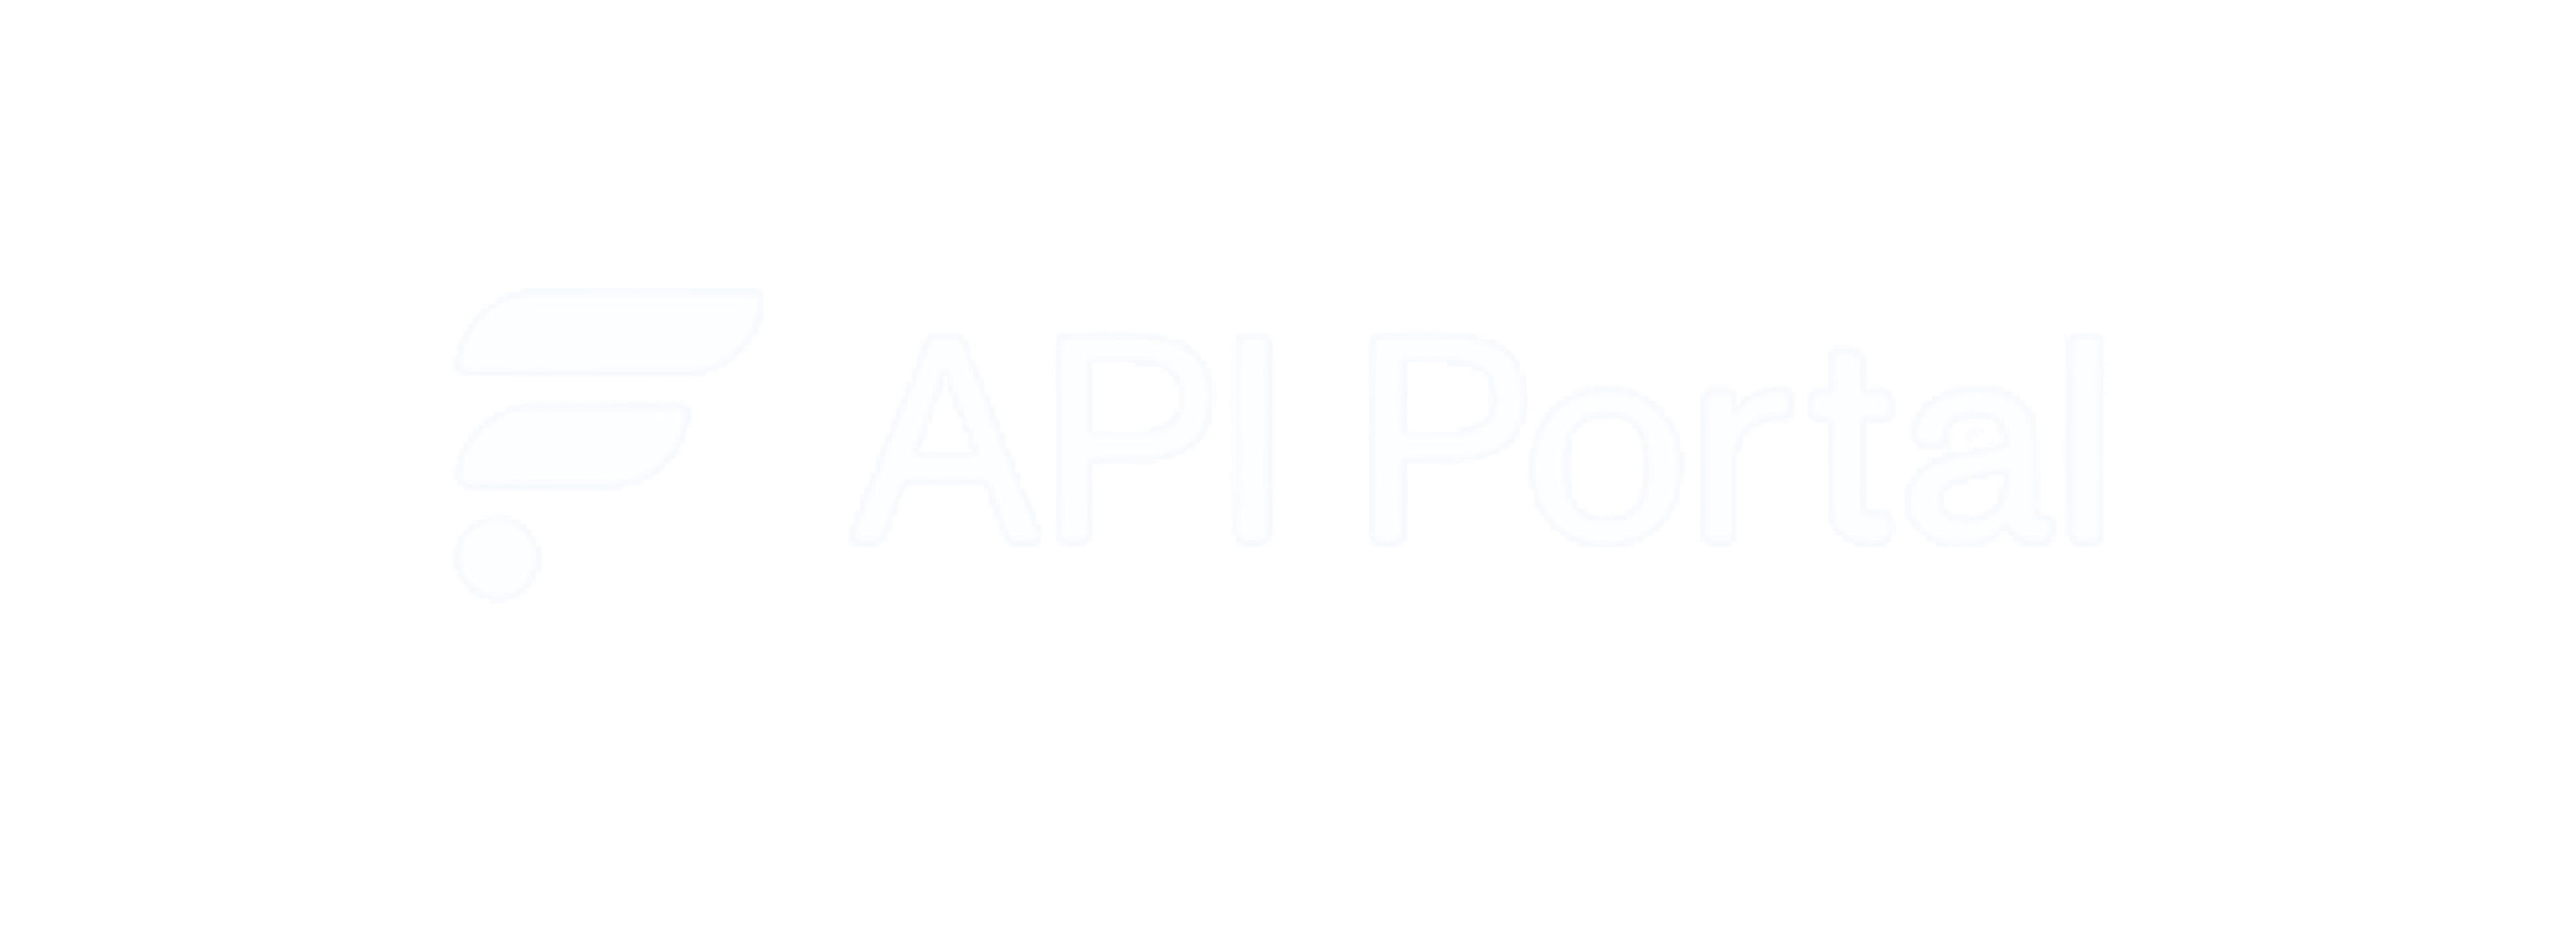 Flare API Portal Logo